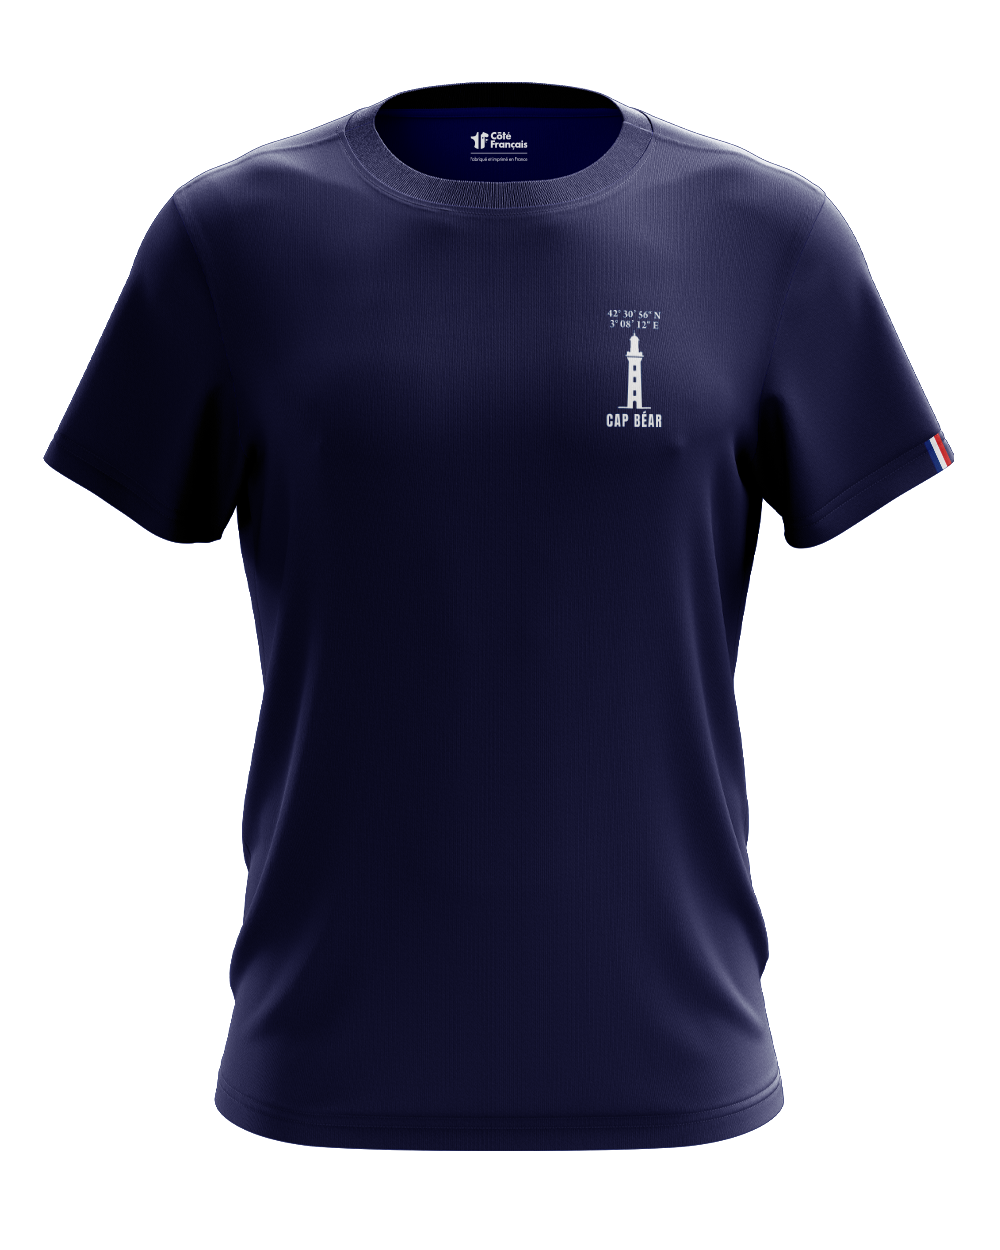 T-shirt brodé Cap béar - bleu marine